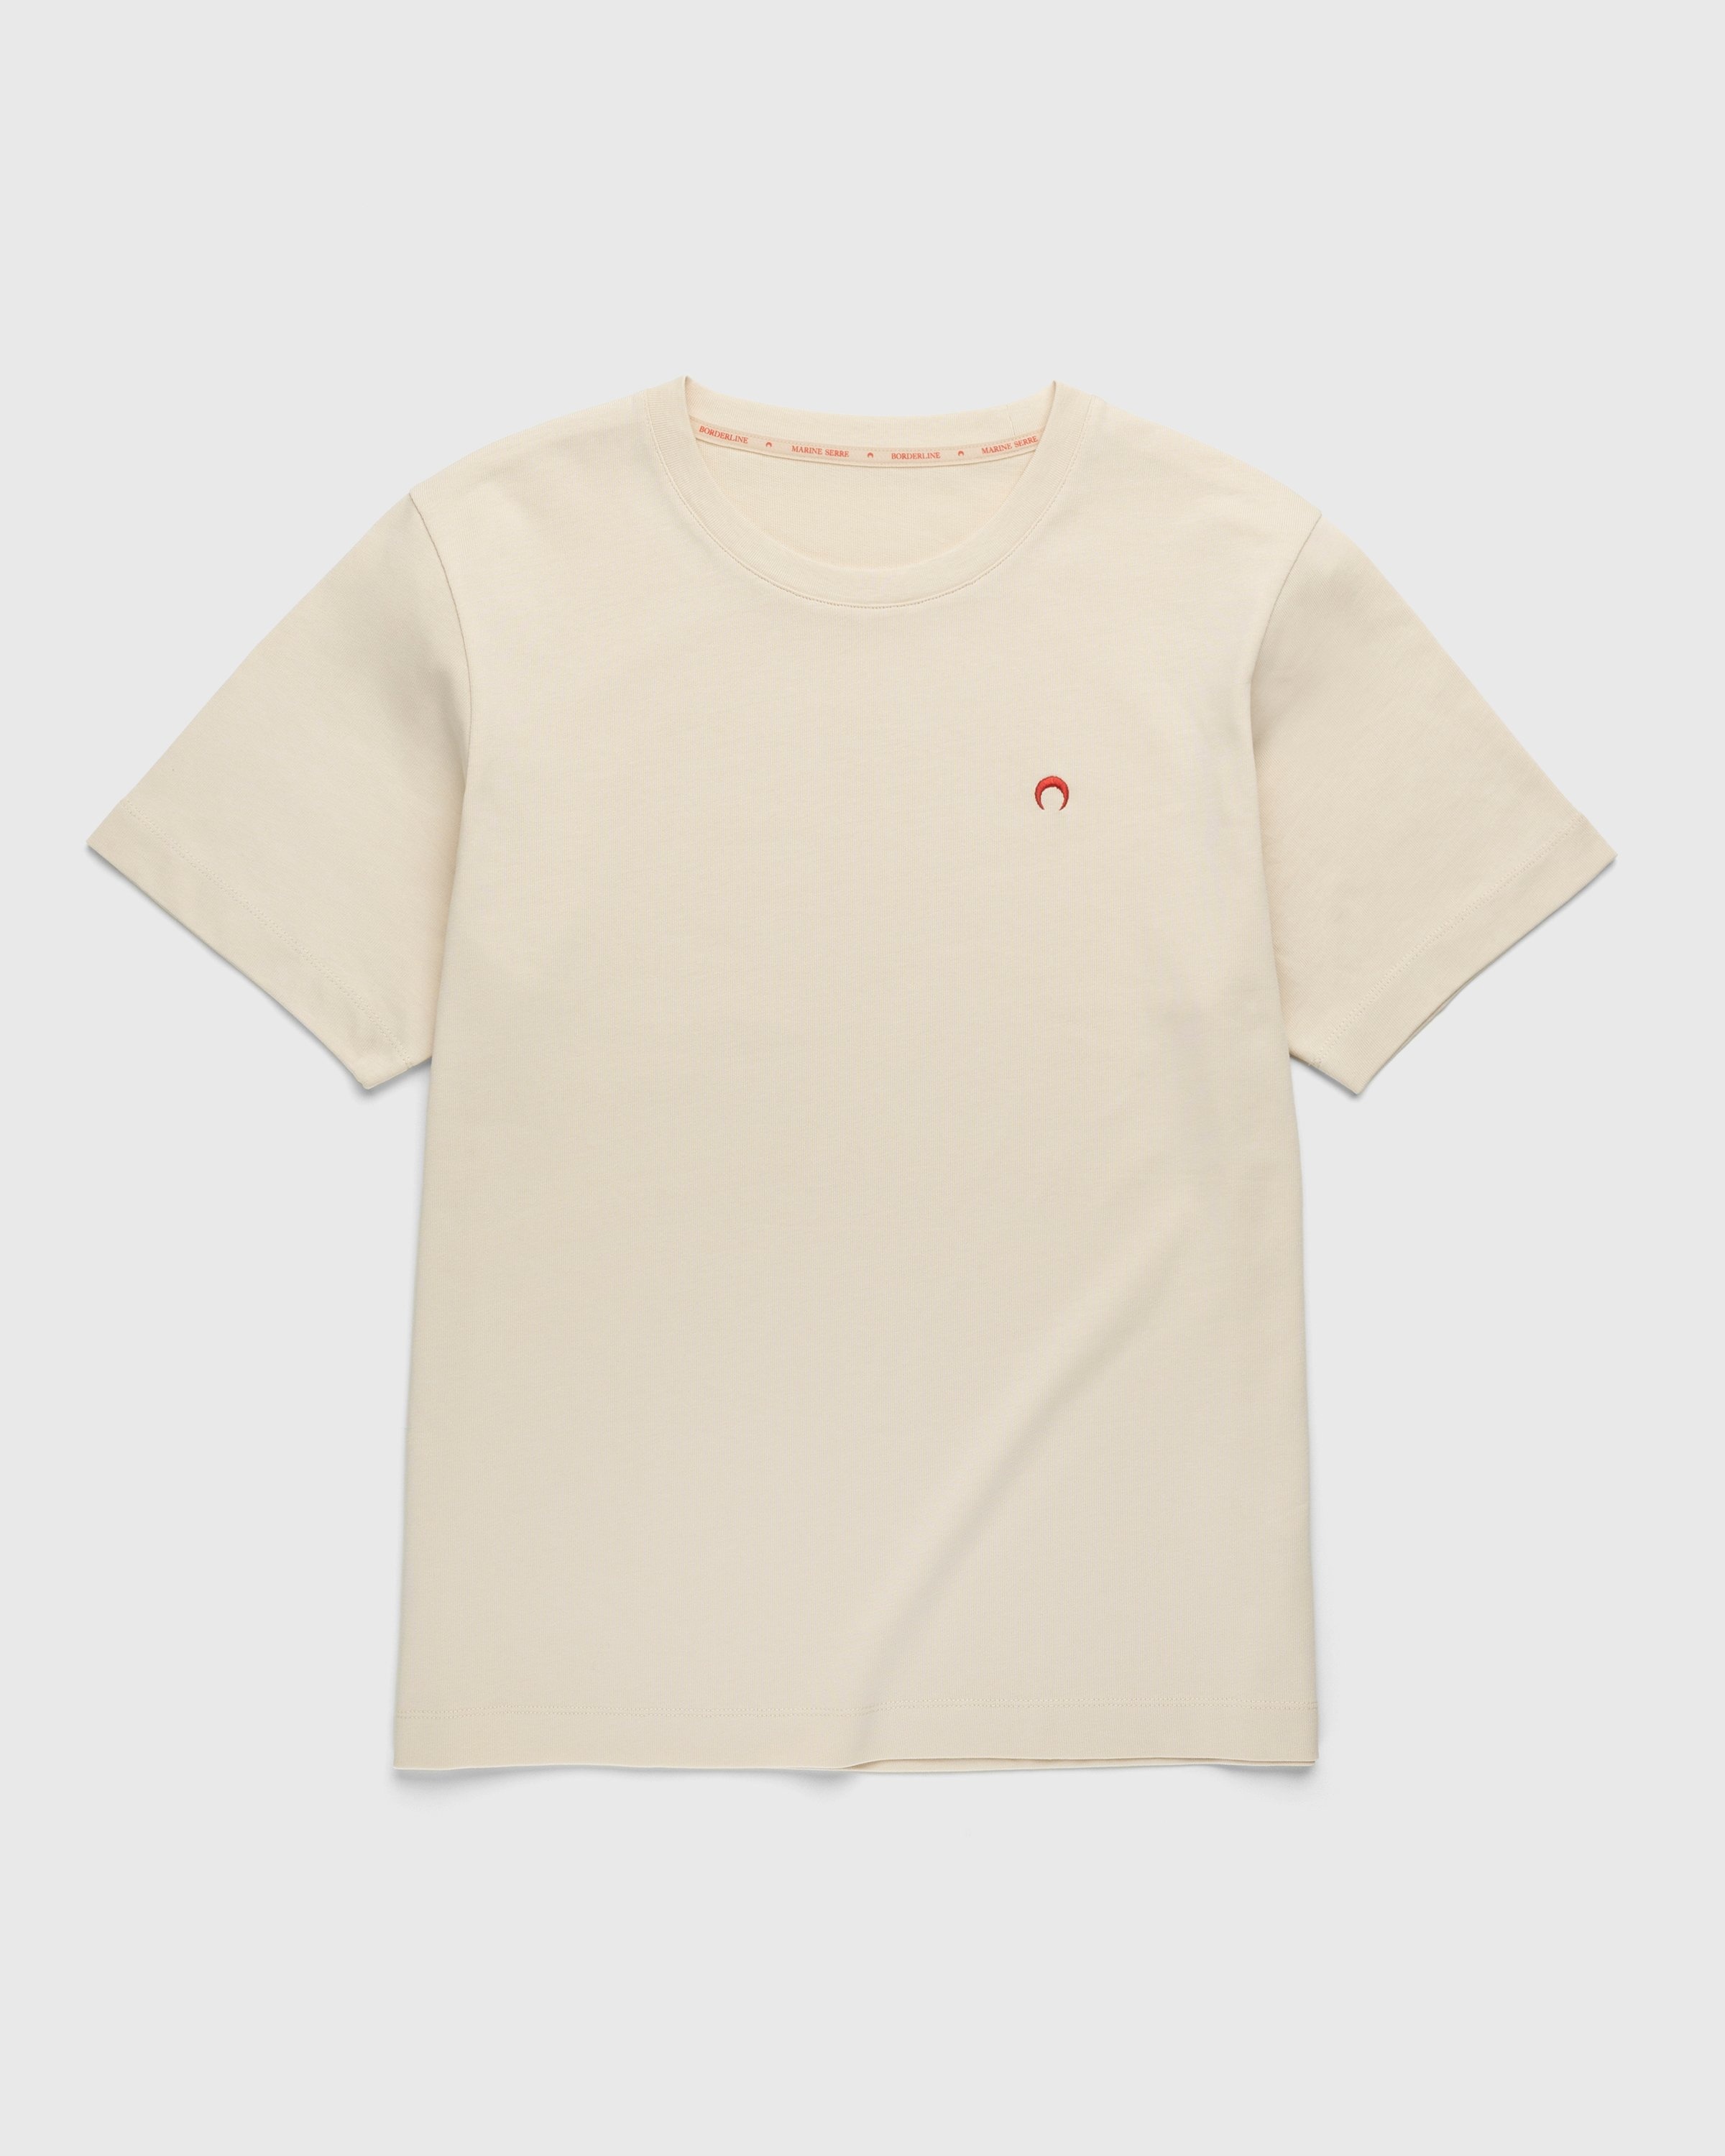 Marine Serre – Organic Cotton T-Shirt Beige - Tops - Beige - Image 1